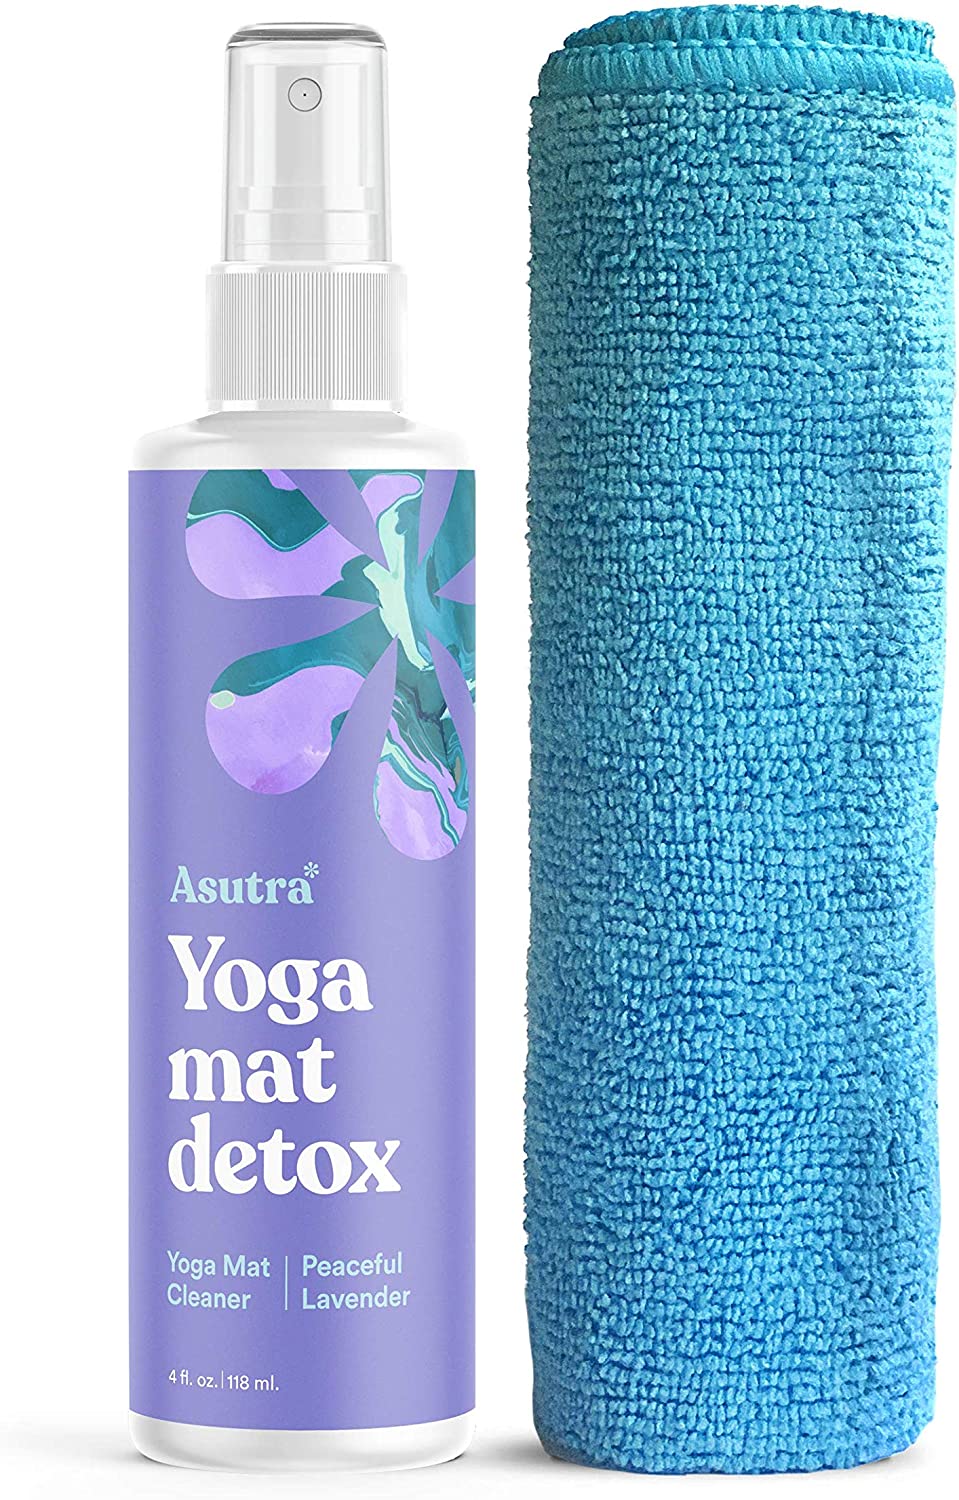 asutra yoga mat cleaner